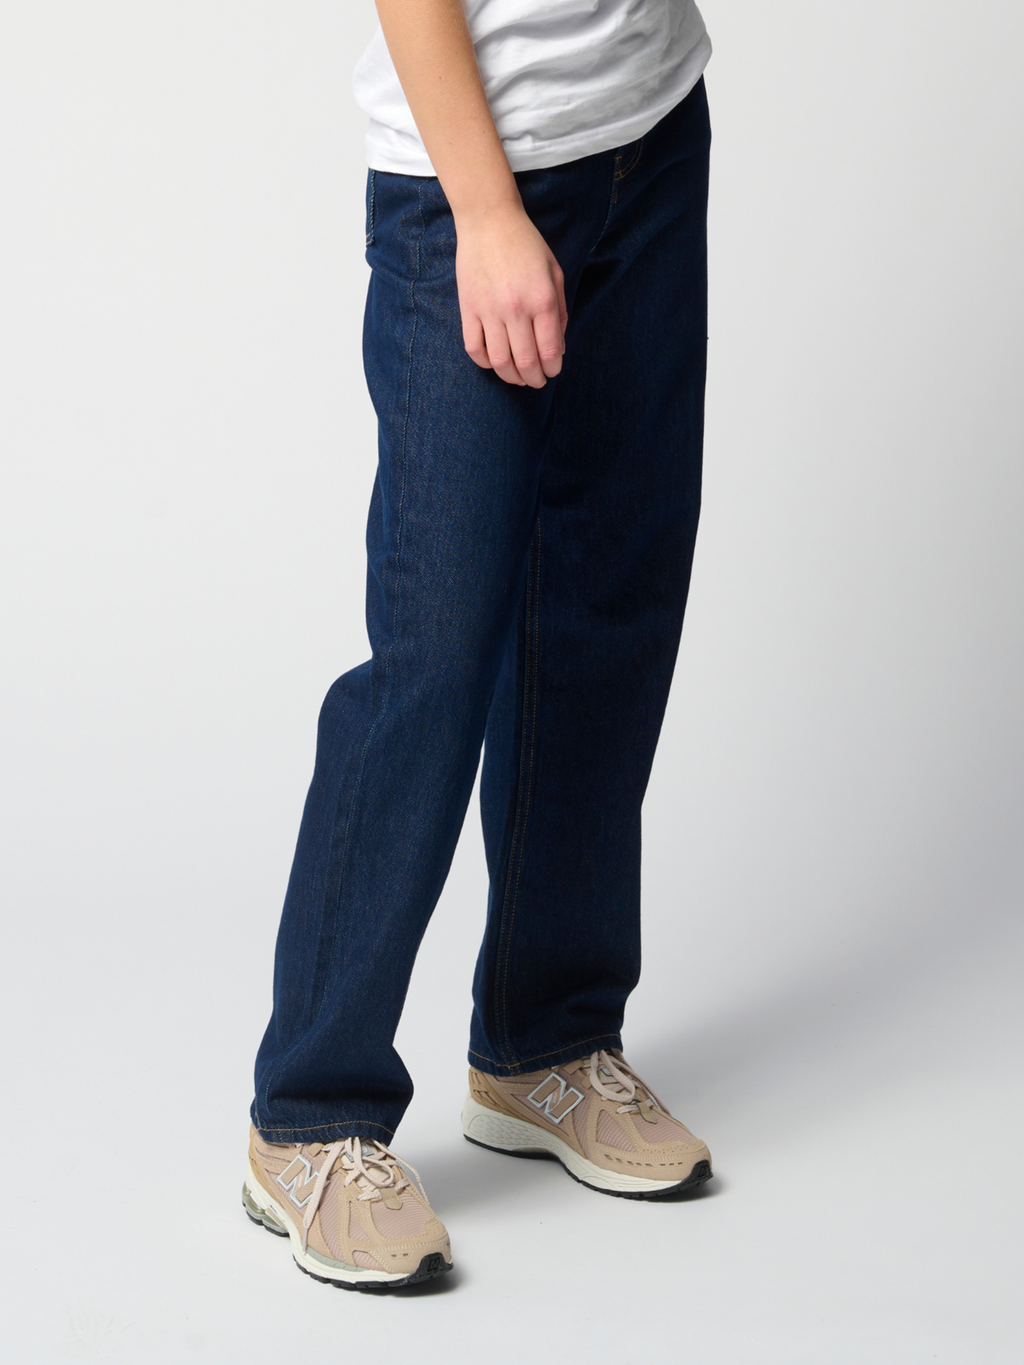 Performance Loose Jeans - Medium Blue Denim